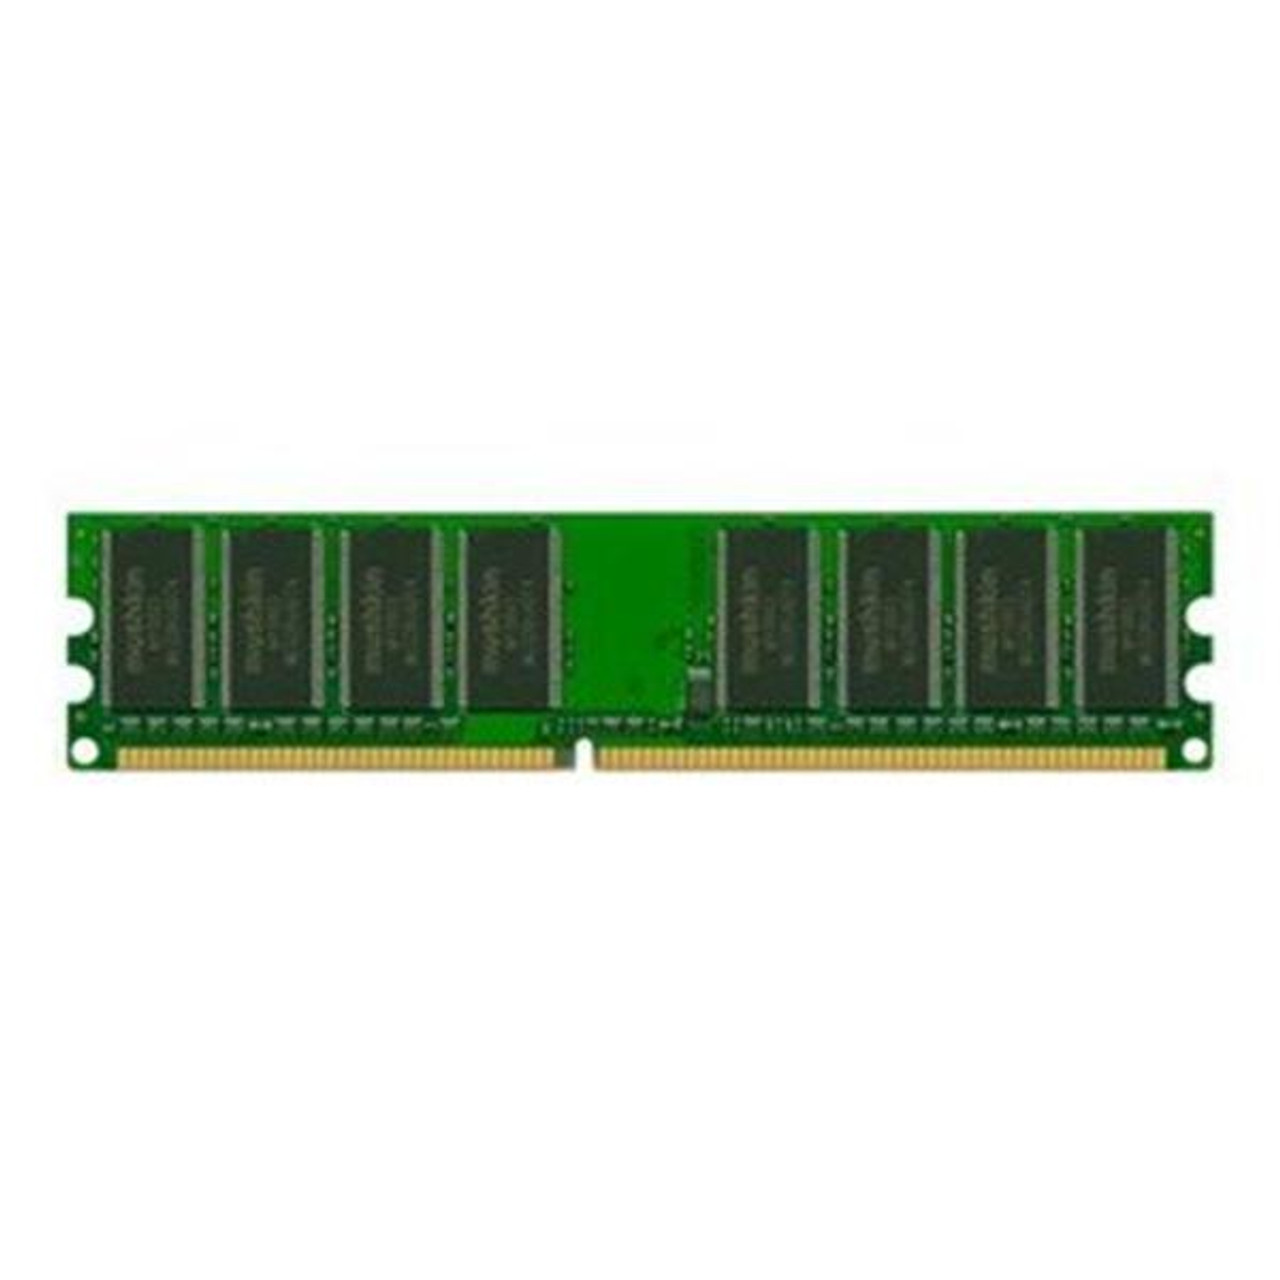 M8833G/A Apple 512MB PC2700 DDR-333MHz non-ECC Unbuffered CL2.5 184-Pin DIMM 2.5V Memory Module